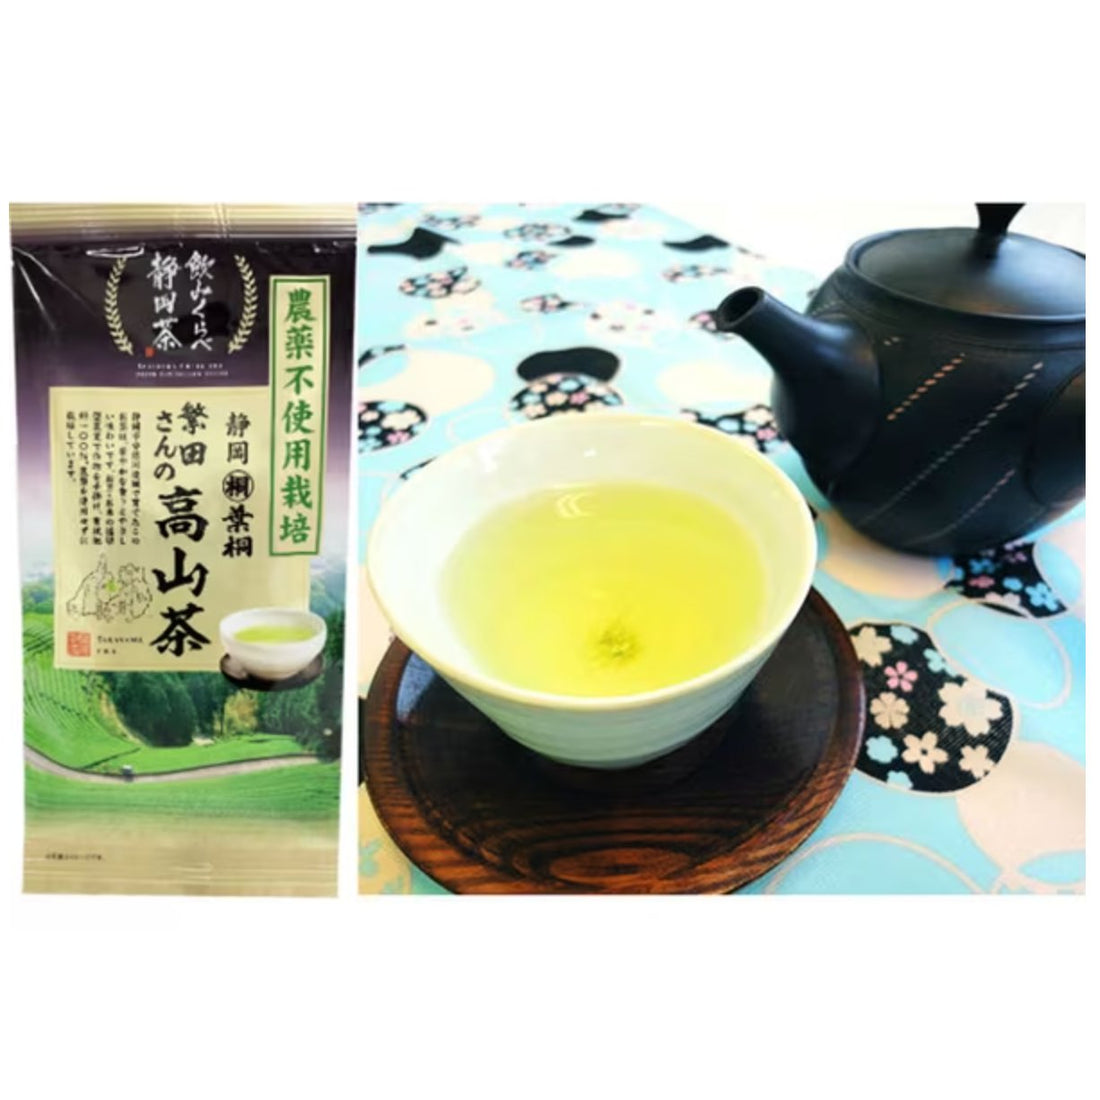 Hagiri Alpine tea grown without pesticides 80g - NihonMura